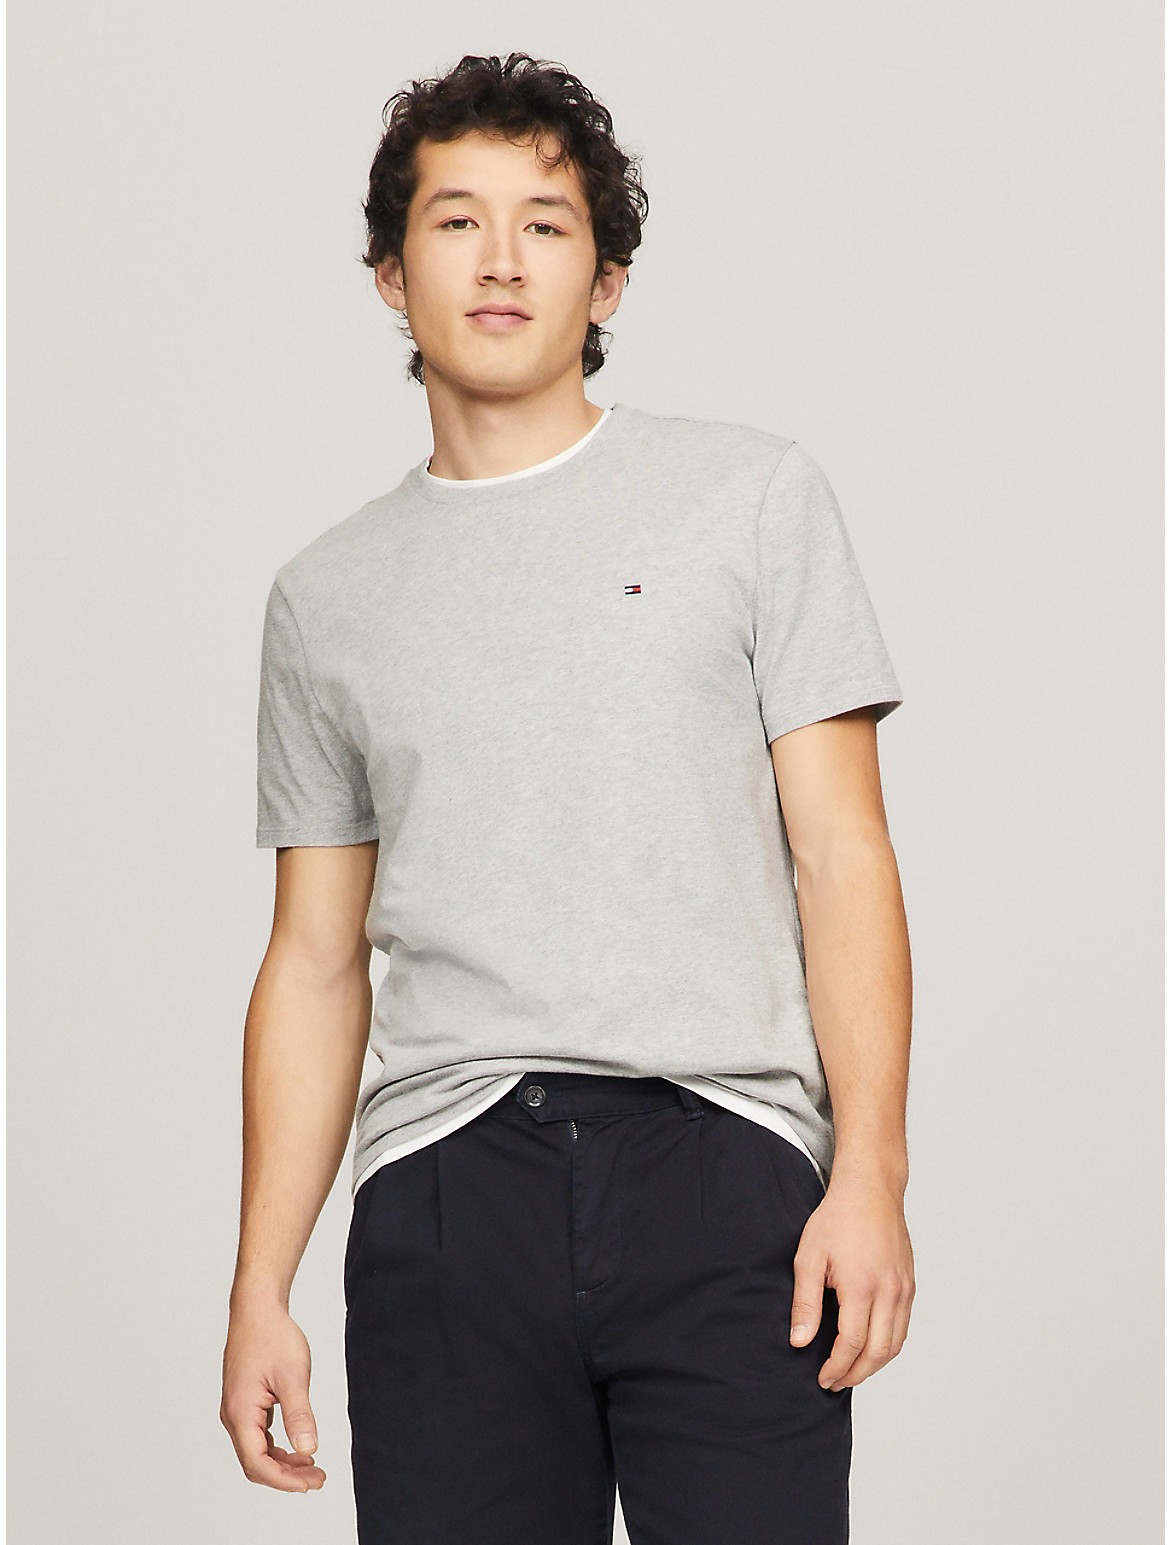 Tommy Hilfiger Men's Everyday Solid T-Shirt - Grey - XL